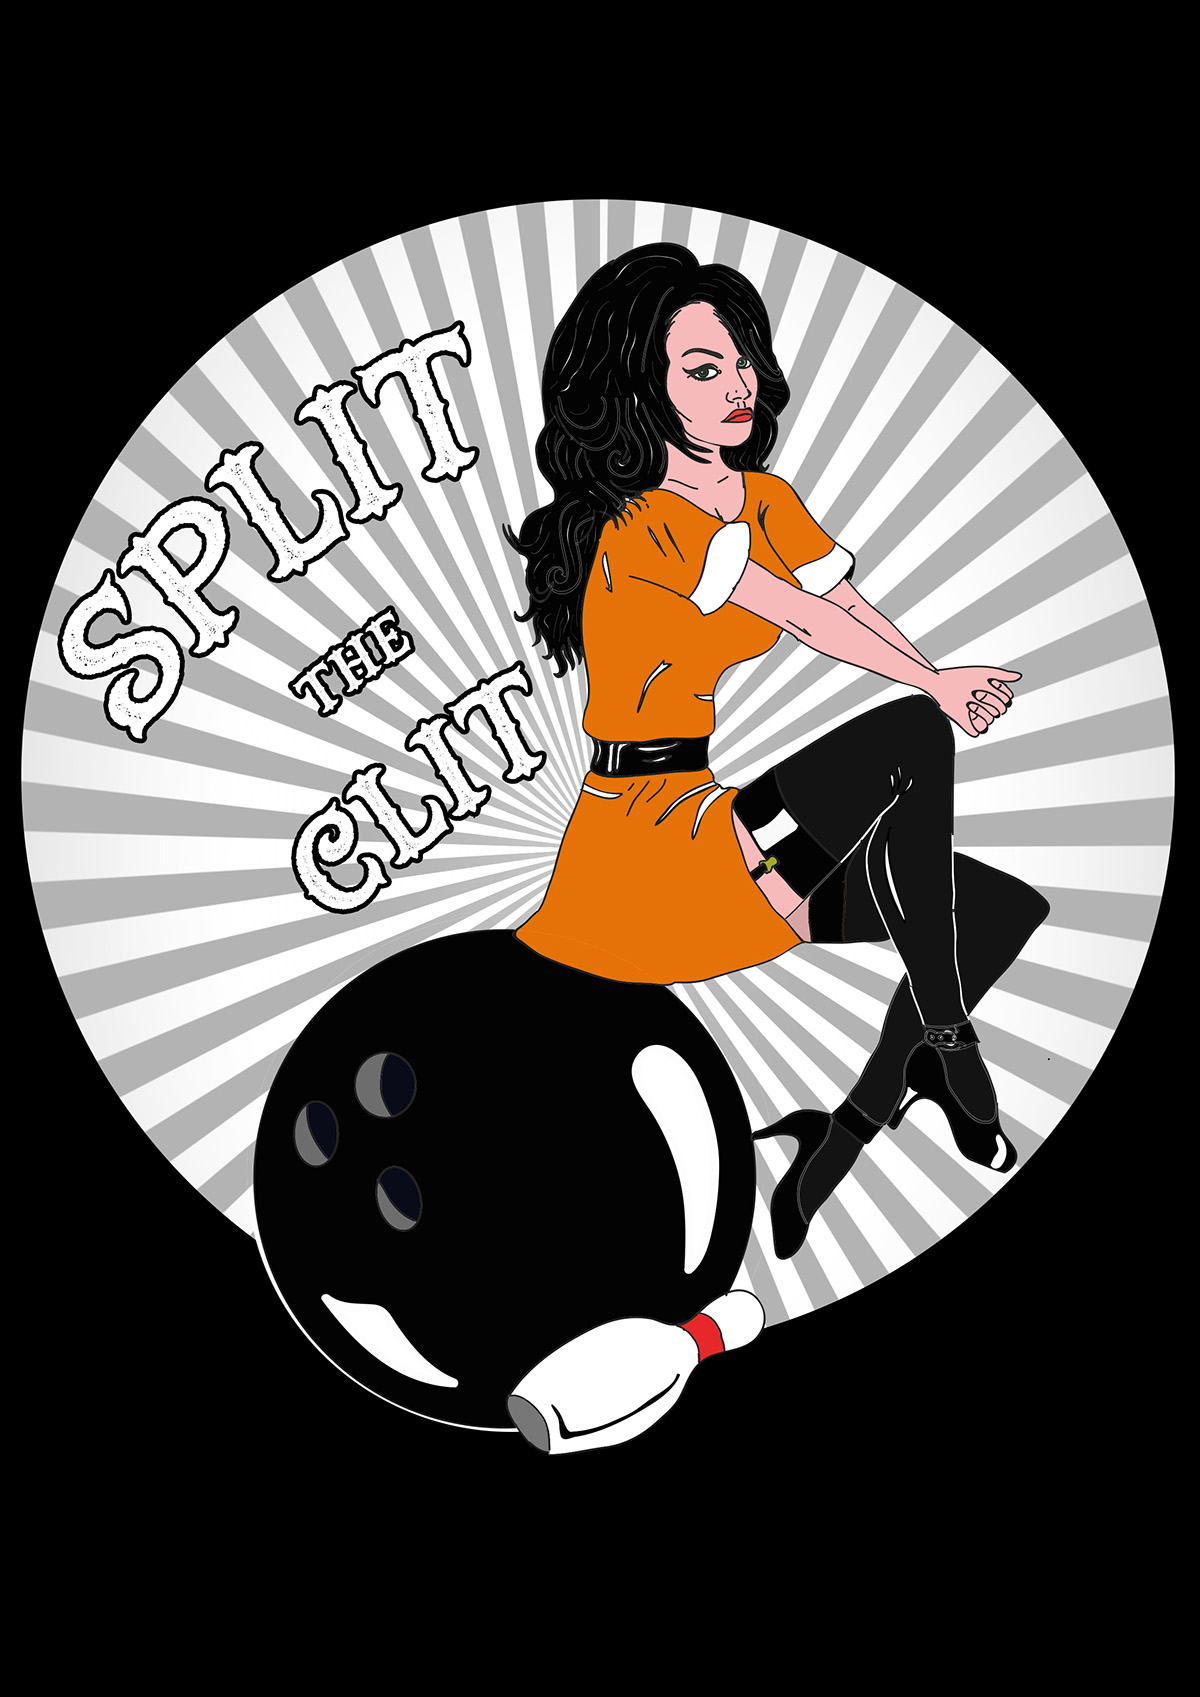 pinup bowling team splittheclit Illustrator wacom digital Retro vintage rocknroll